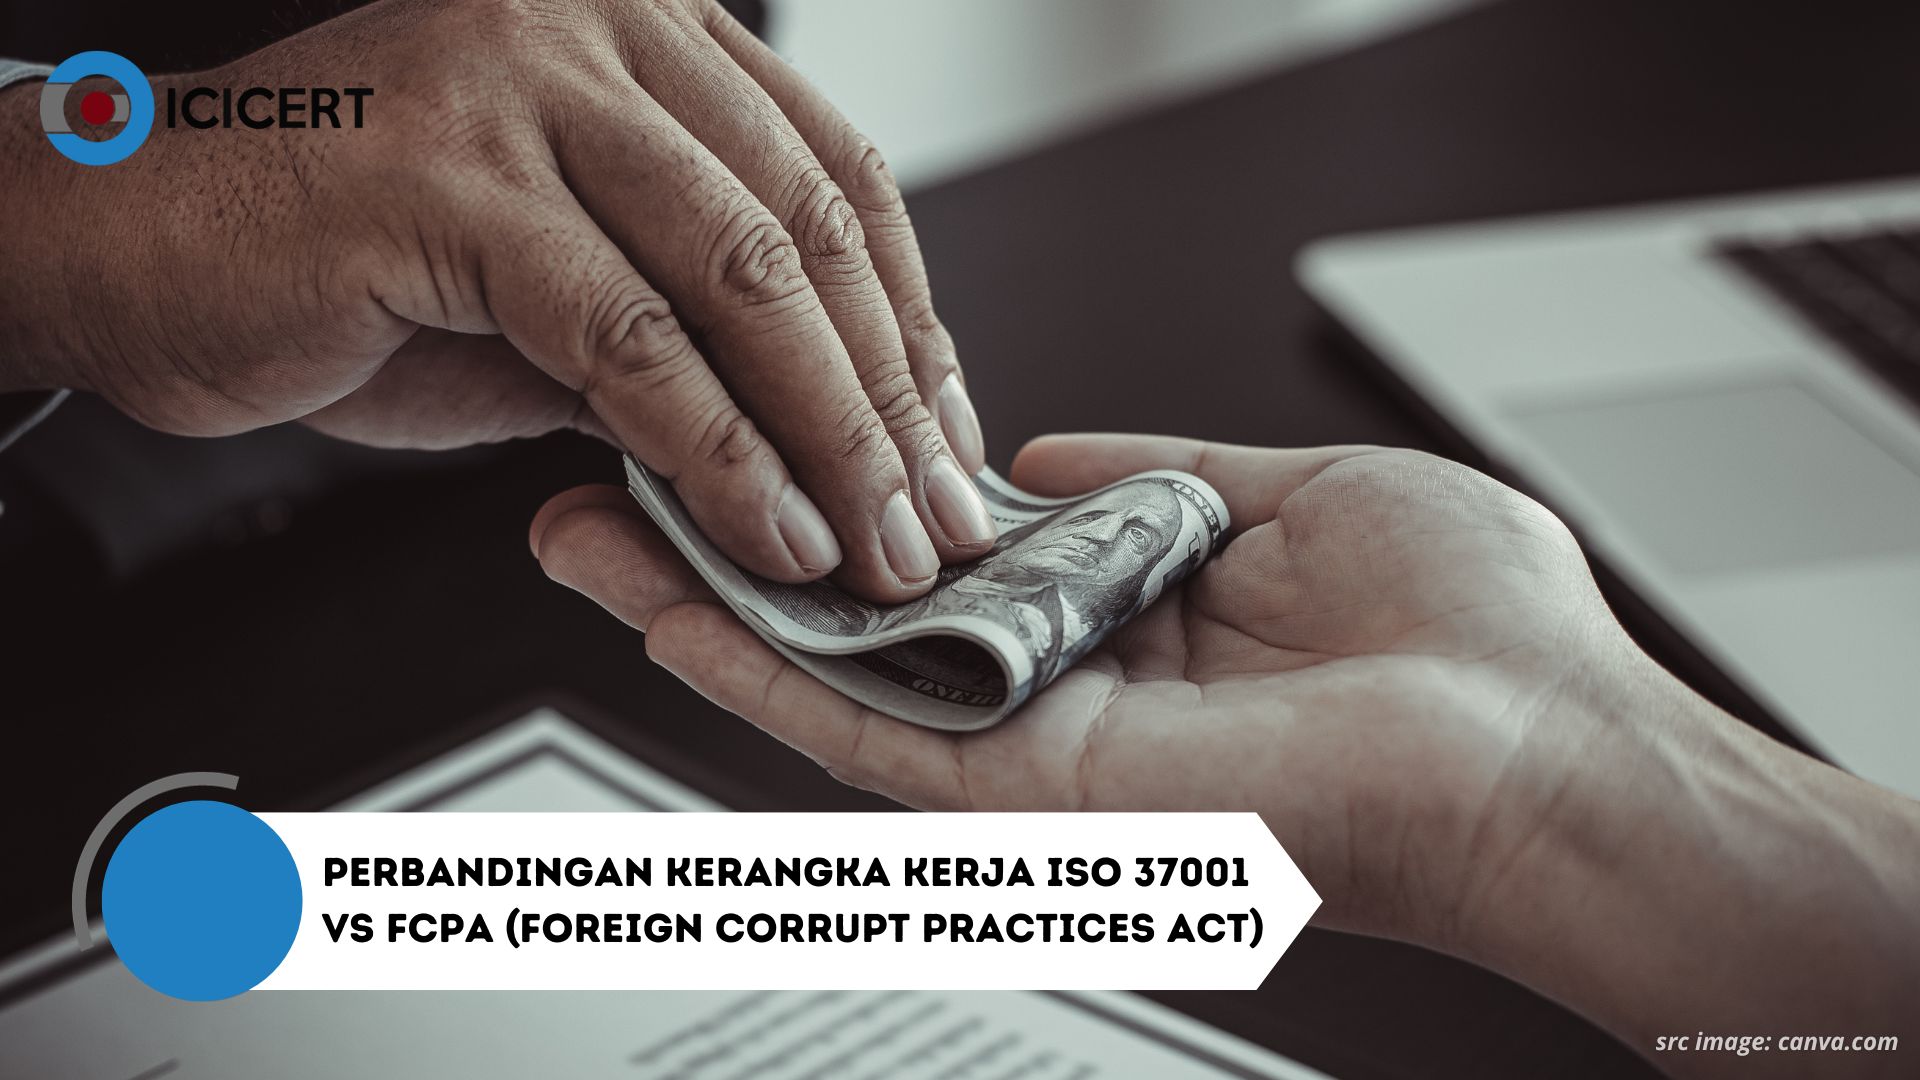 Perbandingan Kerangka Kerja ISO 37001 vs FCPA (Foreign Corrupt Practices Act)